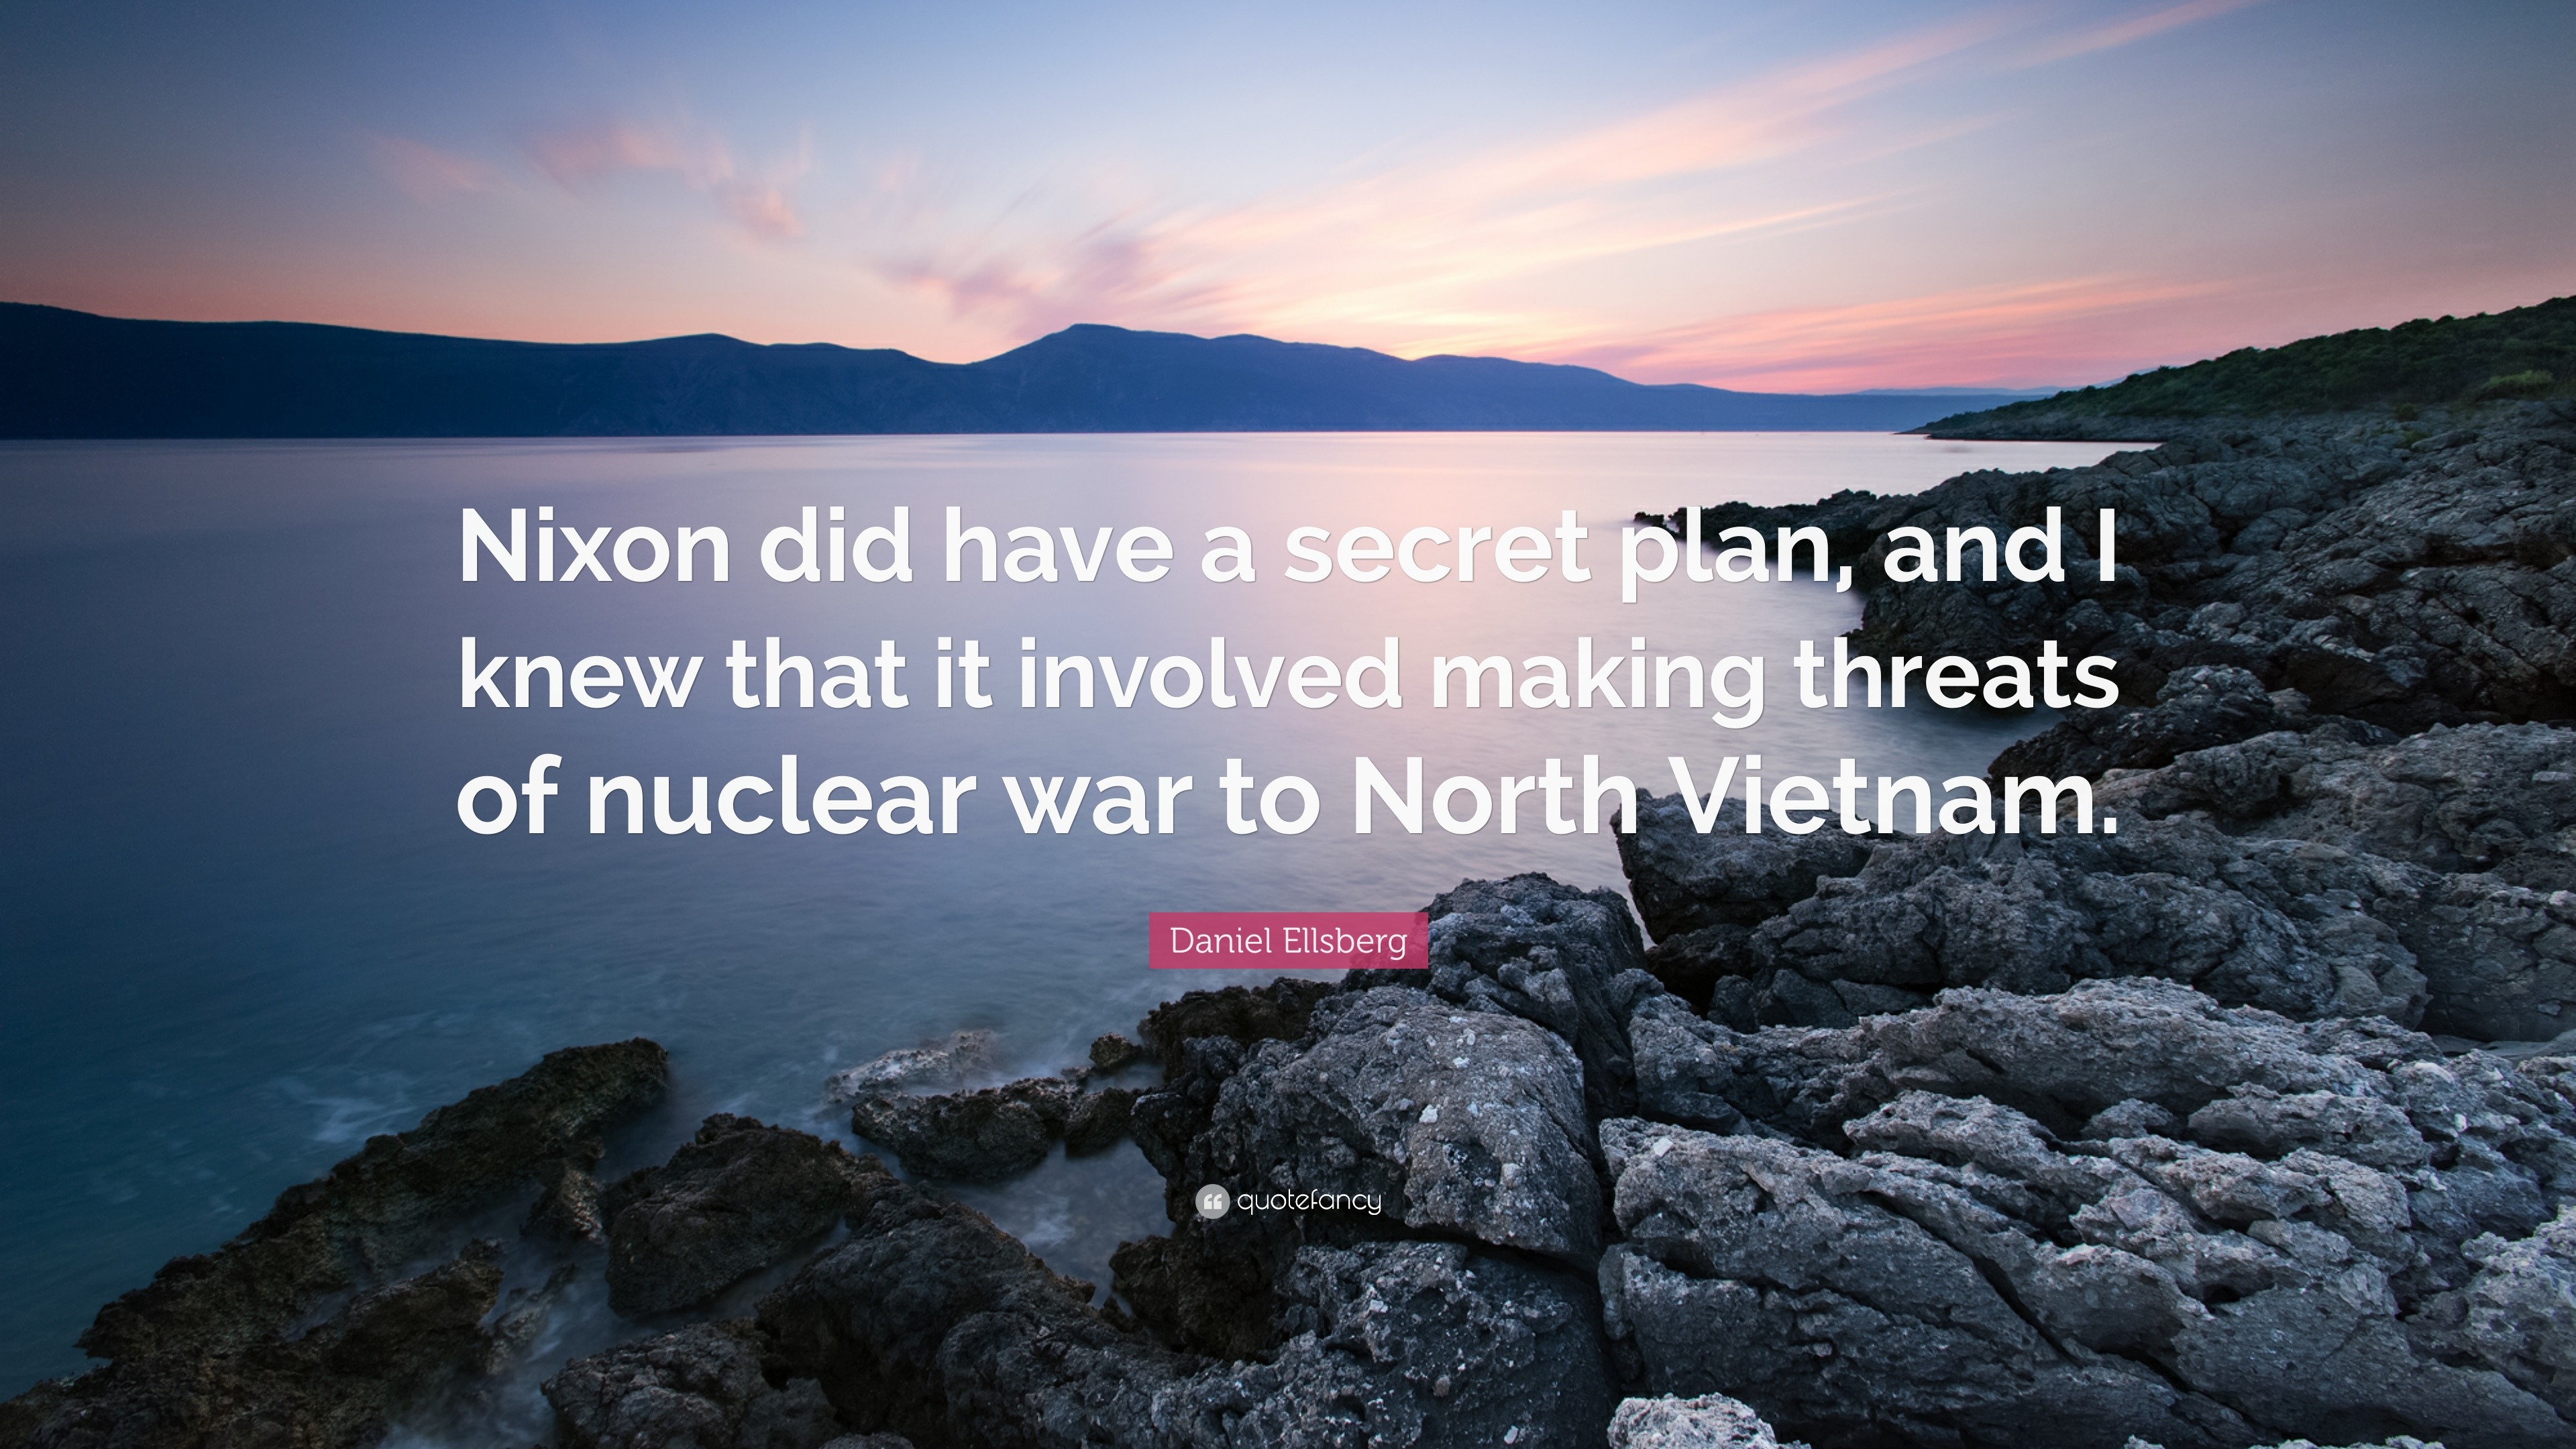 Daniel Ellsberg Quote “nixon Did Have A Secret Plan And I Knew That